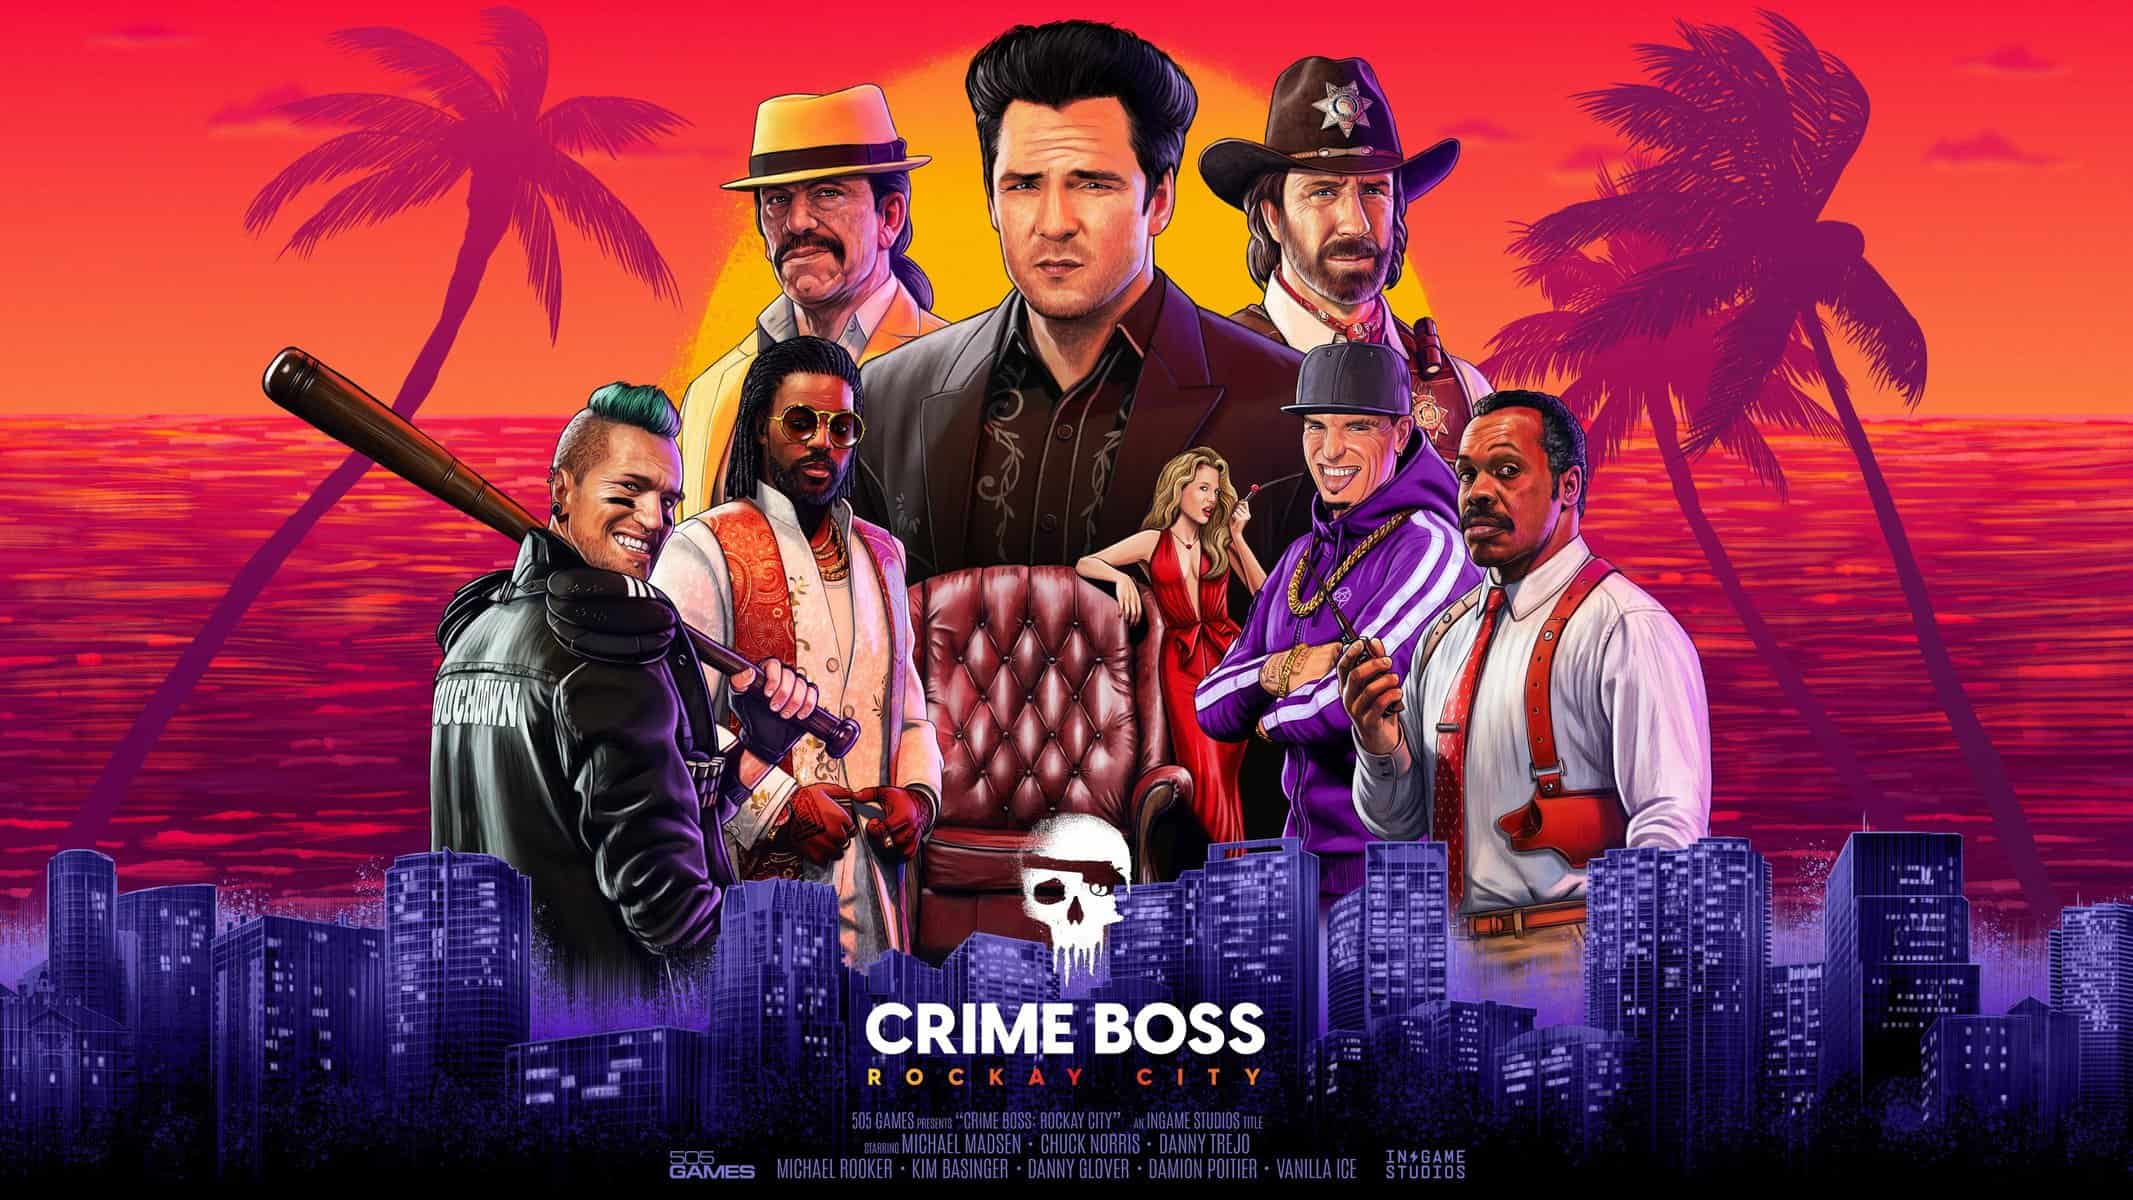 crime boss rockay city review